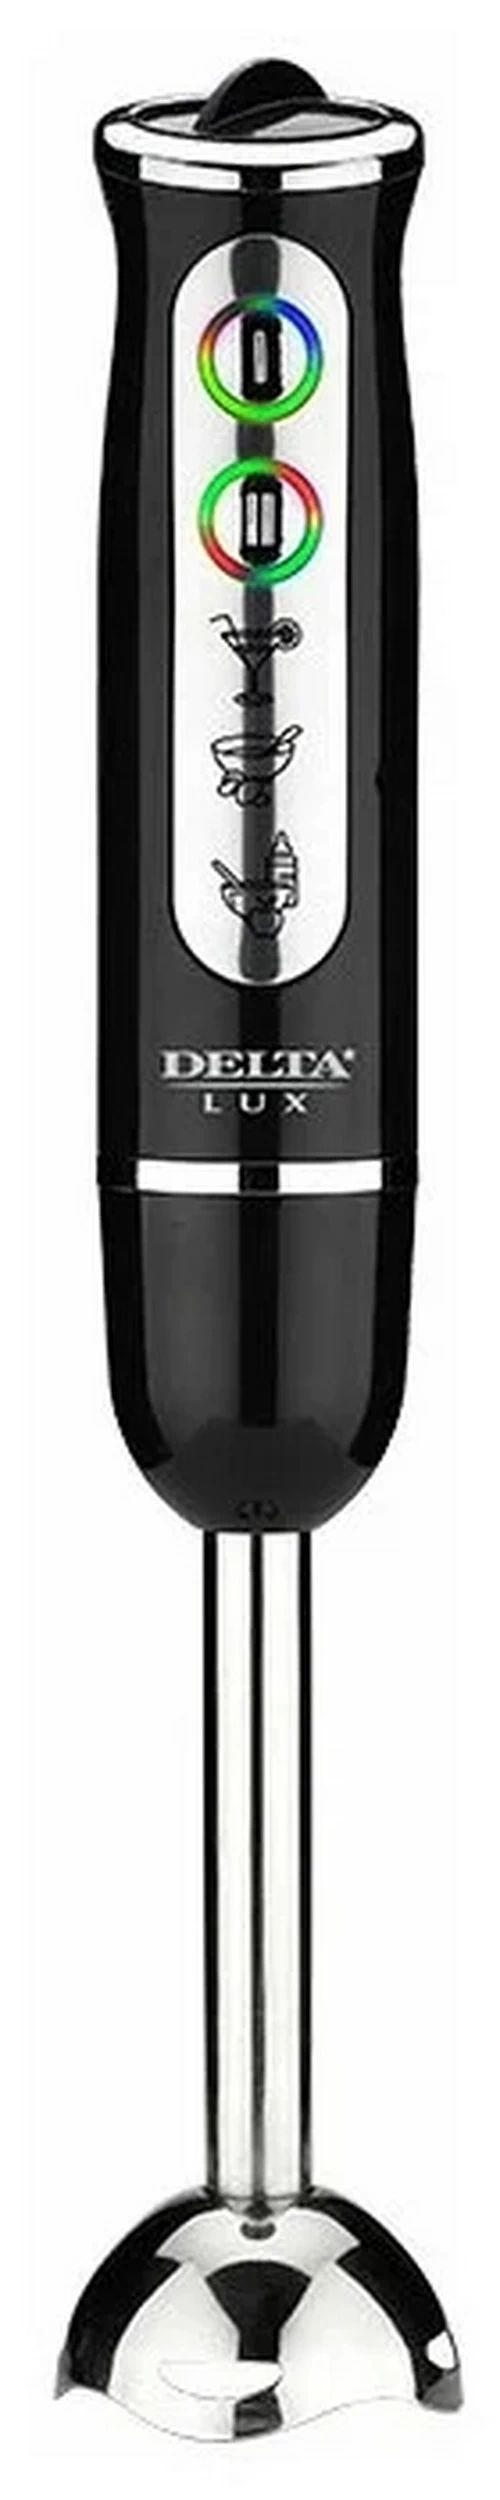 Погружной блендер Delta Lux DL-7039 черный блендер delta lux de 7006b